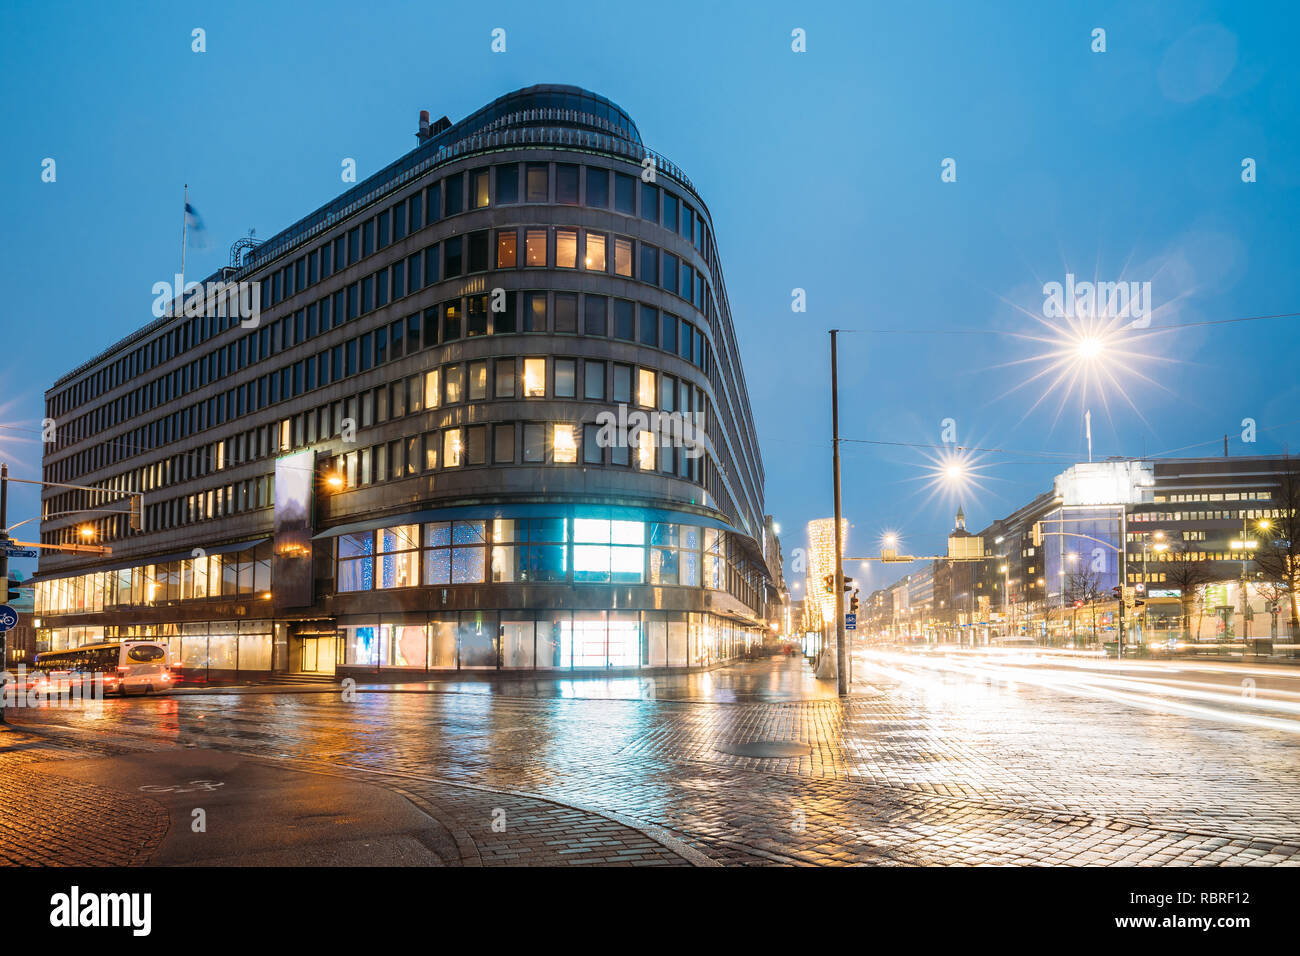 Helsinki, Finland. Hotel And Shopping Center On Crossroad Of Kaivokatu Street And Mannerheimintie Or Mannerheim Avenue In Evening Or Night Illuminatio Stock Photo